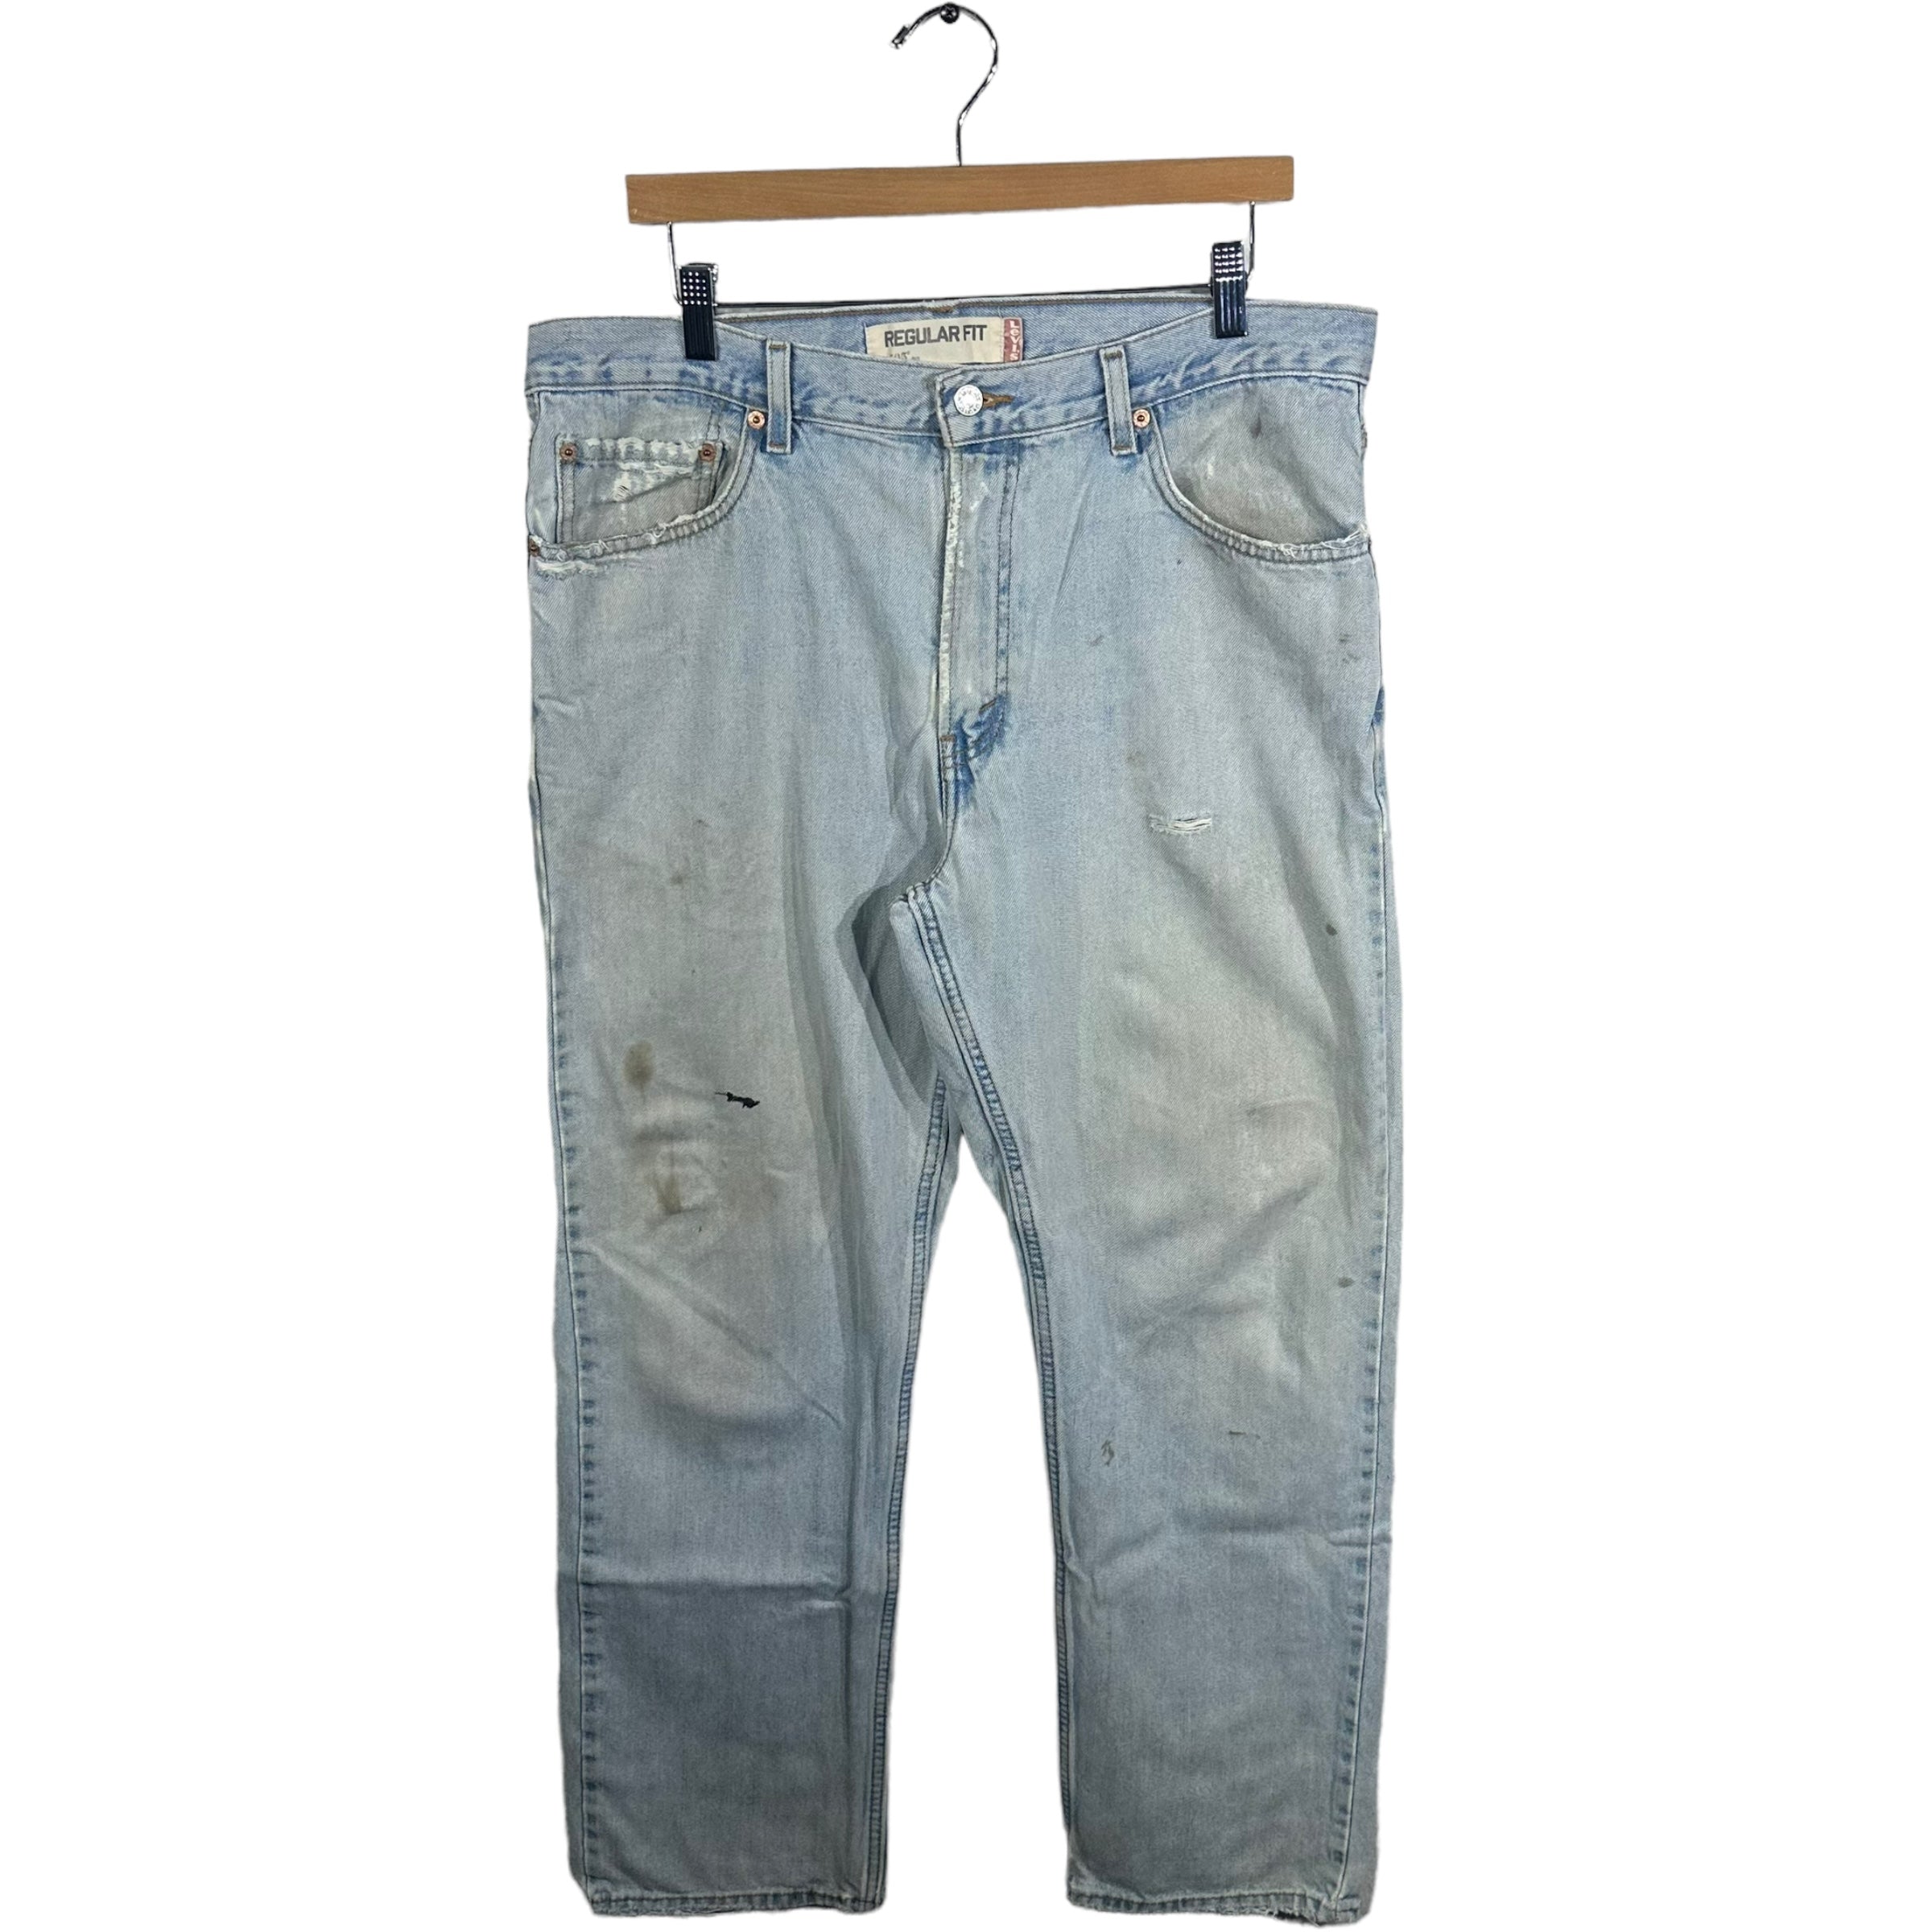 Vintage Levis 505 Distressed Jeans